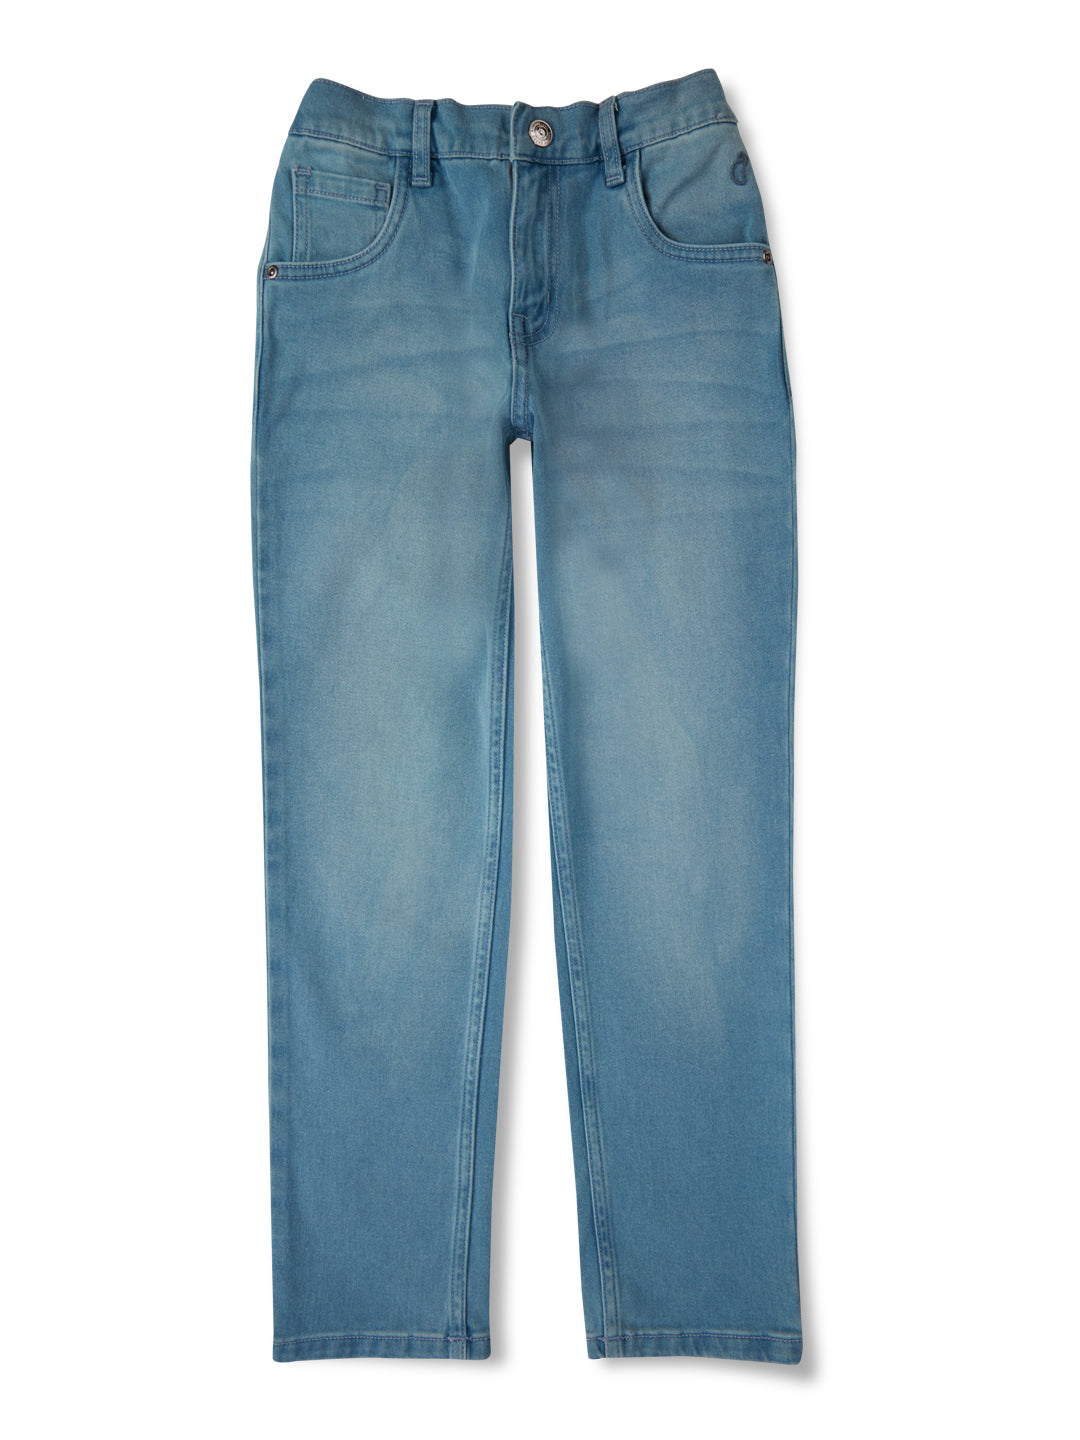 Boys Blue Washed Denim Jeans Elasticated